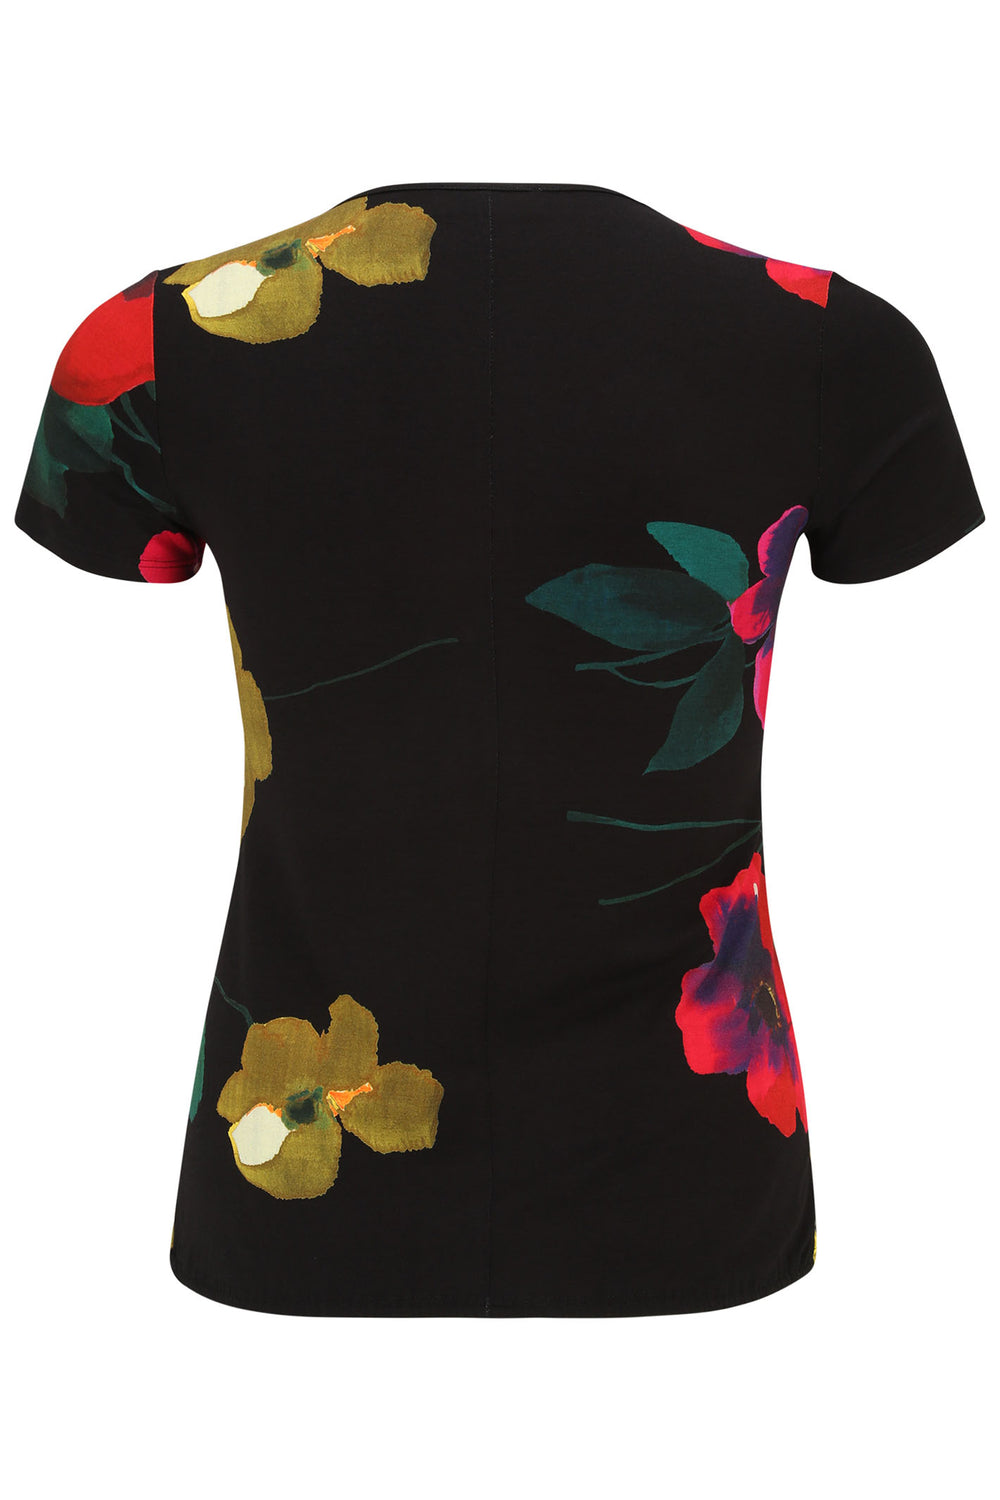 Doris Streich 250344 98 Black Multicolour Flower Print Short Sleeve Top - Shirley Allum Boutique